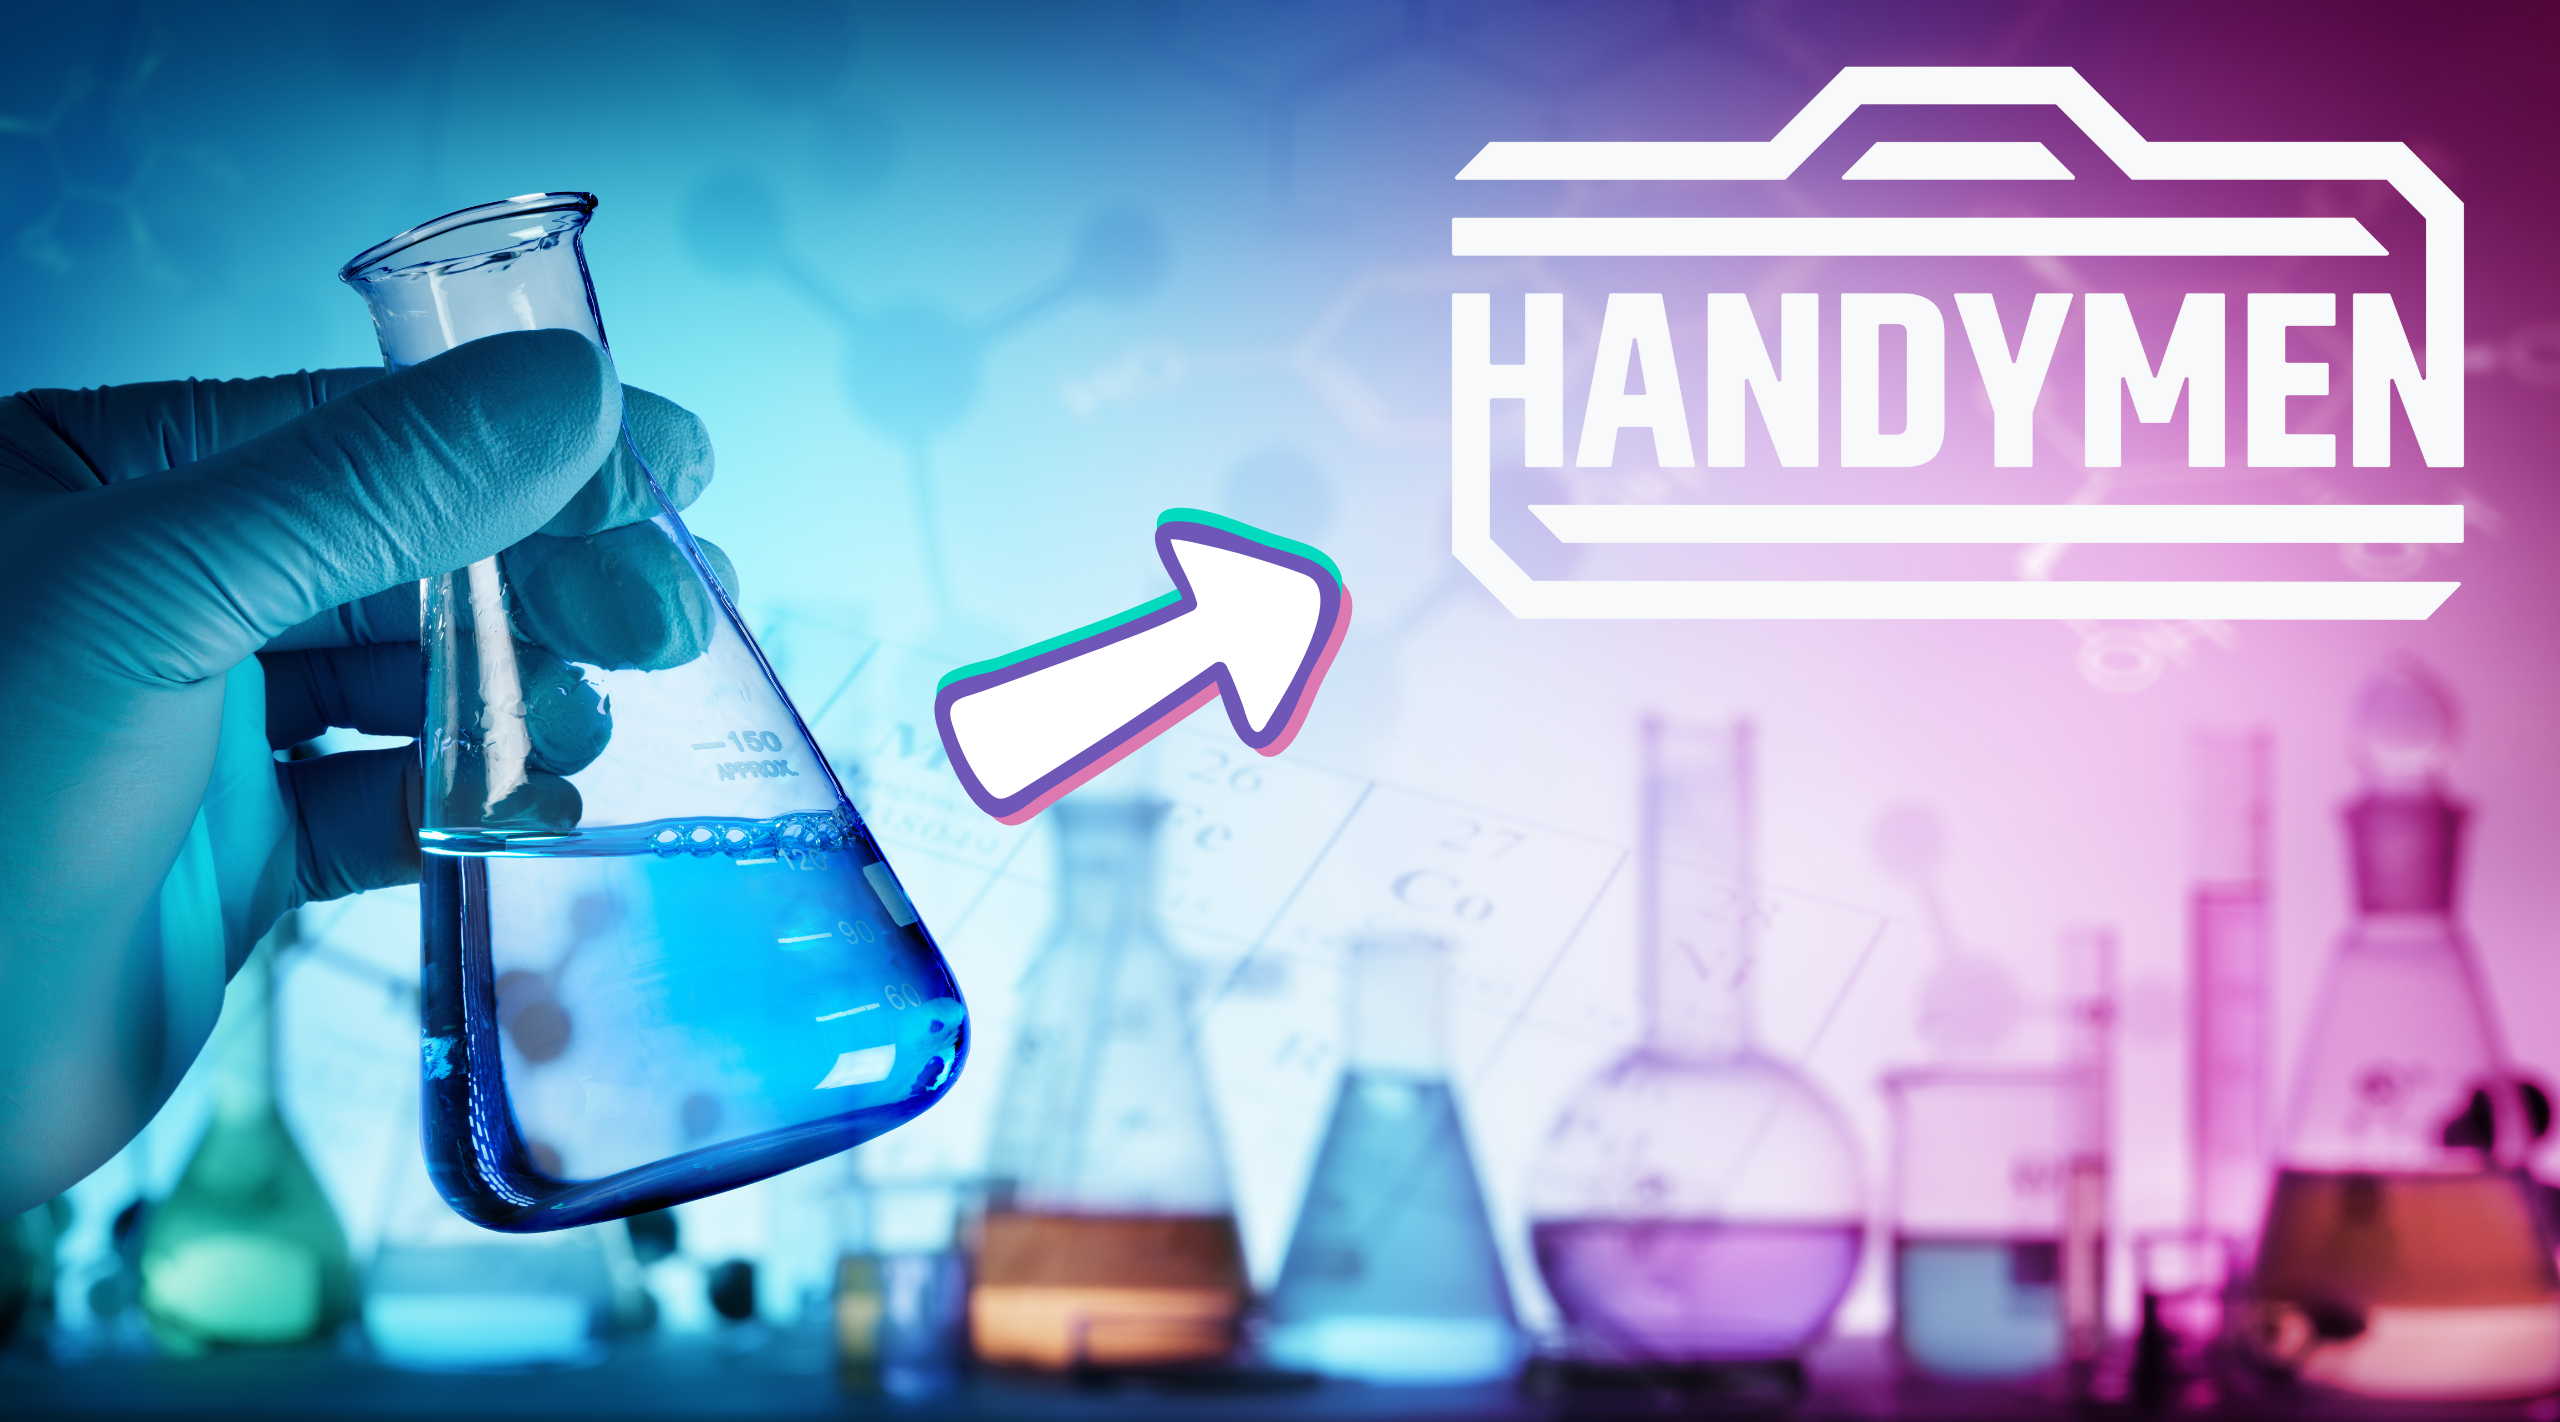 Chemistry lab stock photo with Handymen logo